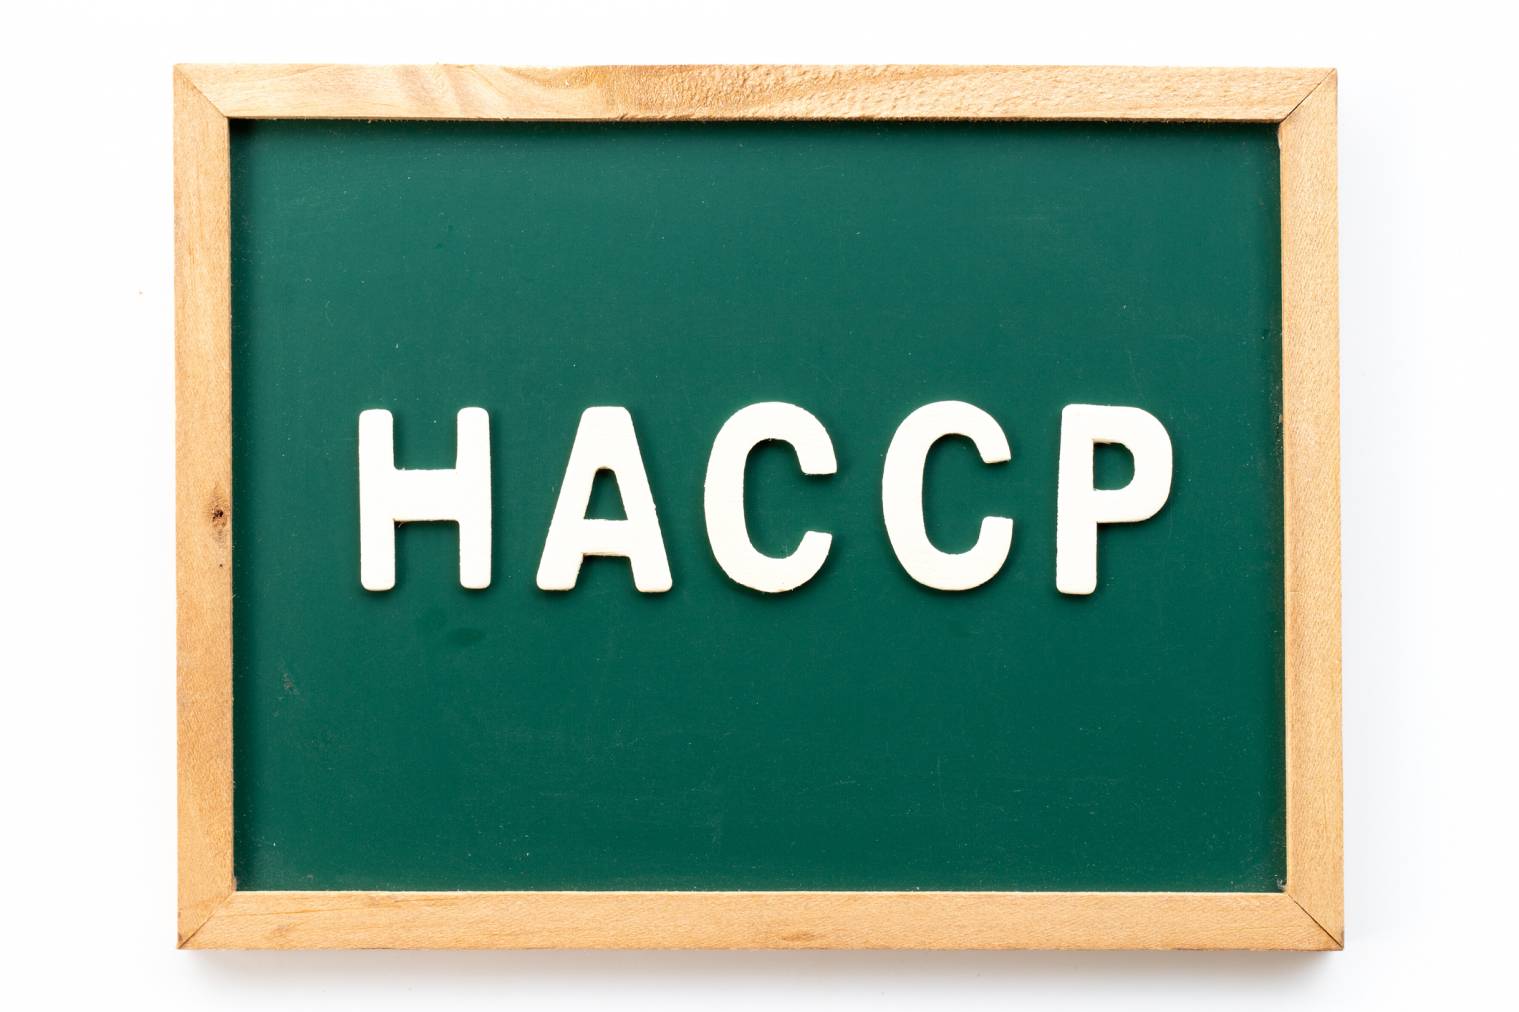 HACCP 